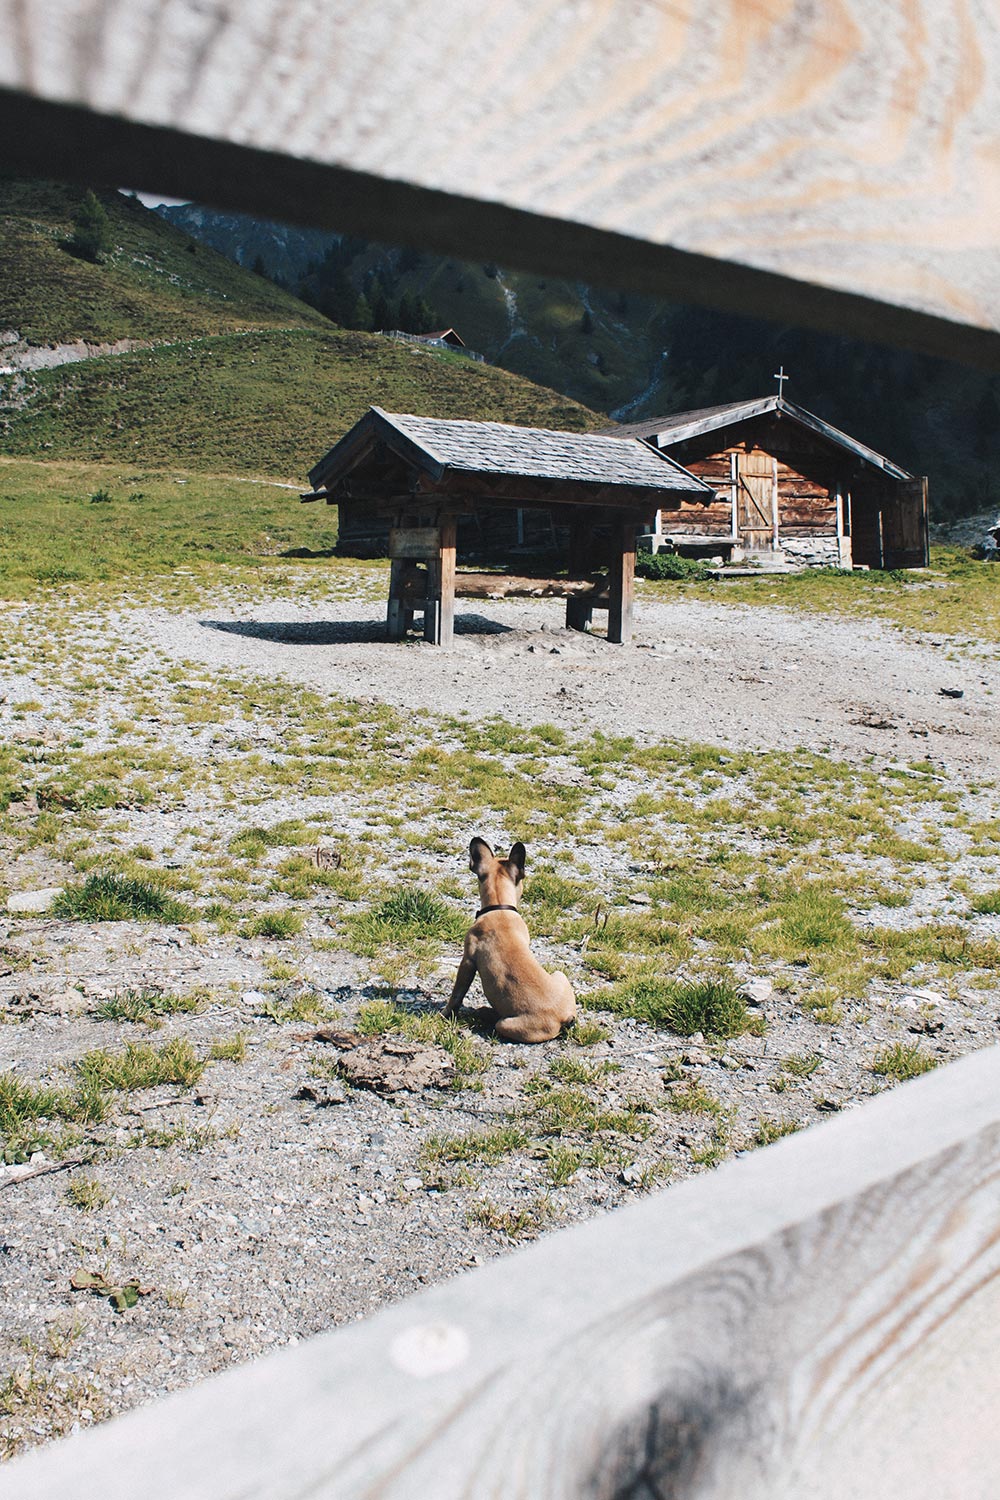 Aufi aufn Berg! Über das Wandern mit Hund in Tirol, Must-Haves, Lifestyle Blog, Tirolblog, whoismocca.com